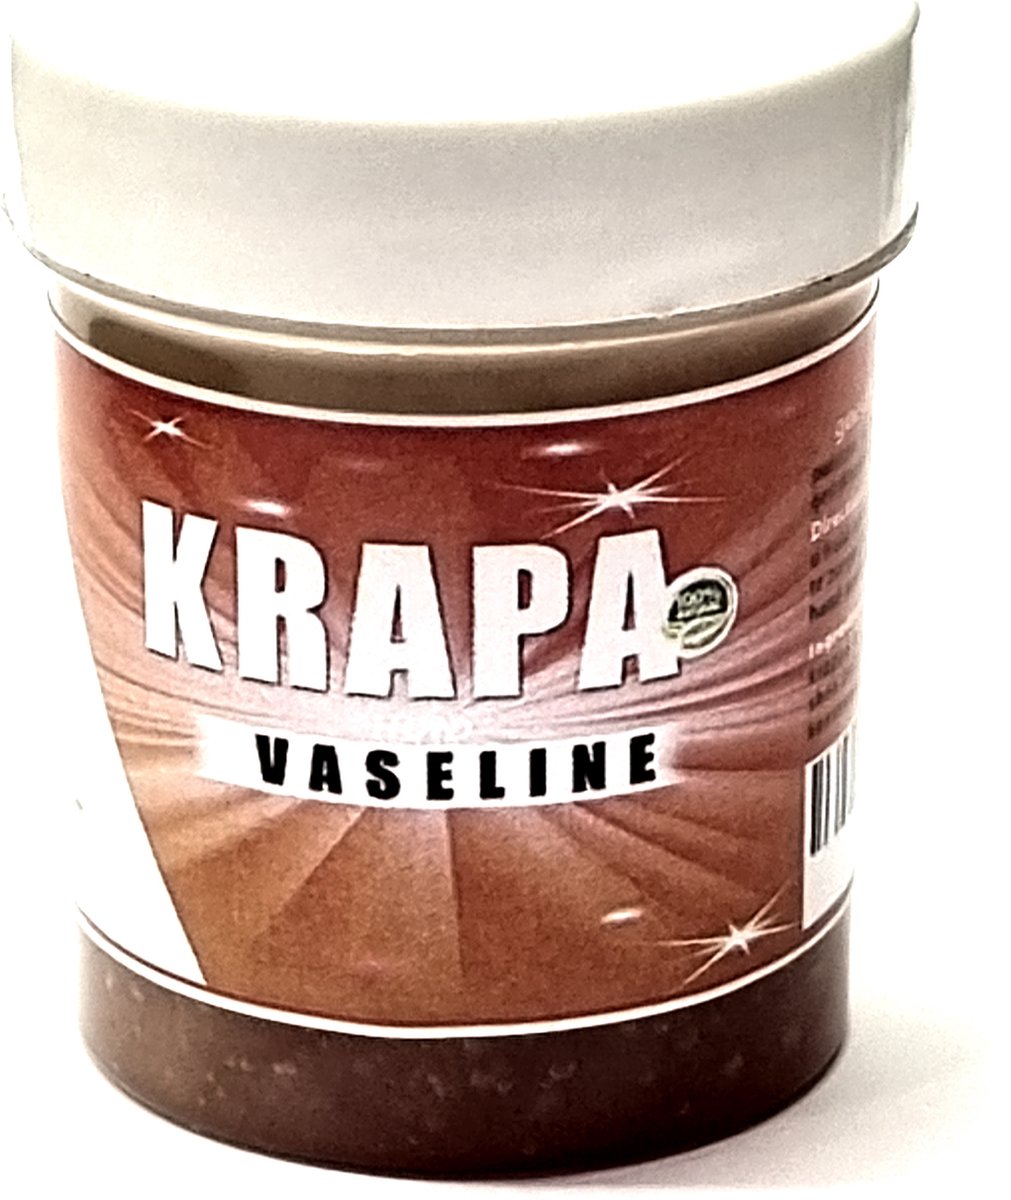 Krappa Vaseline 35 Gr (= een mini potje)